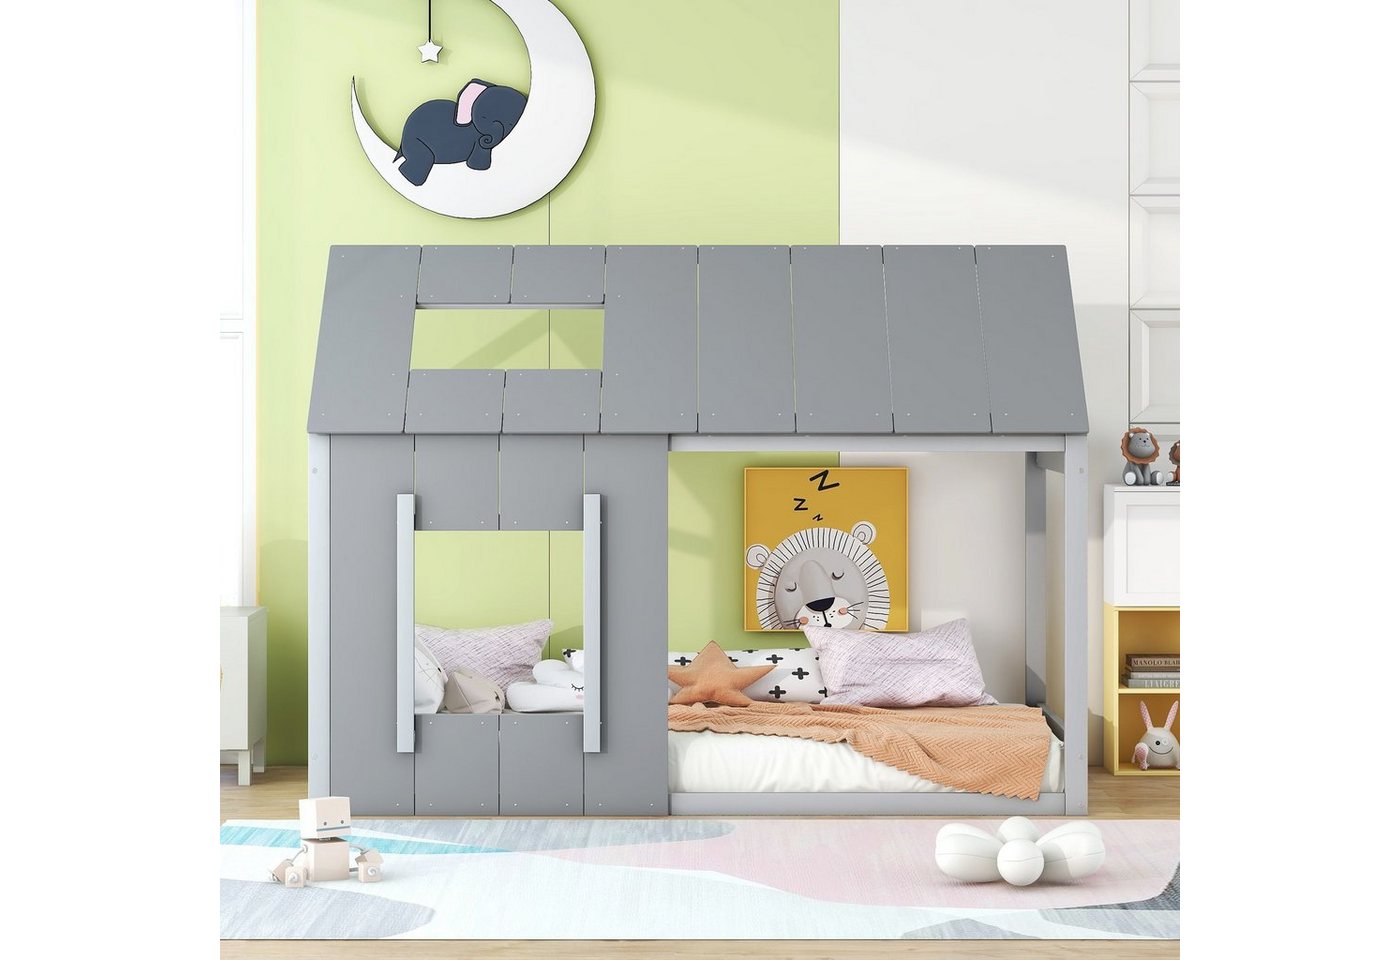 HAUSS SPLOE Kinderbett Kinderbett Holzhaus Bett Bodenbett Bettgestell Baumh günstig online kaufen